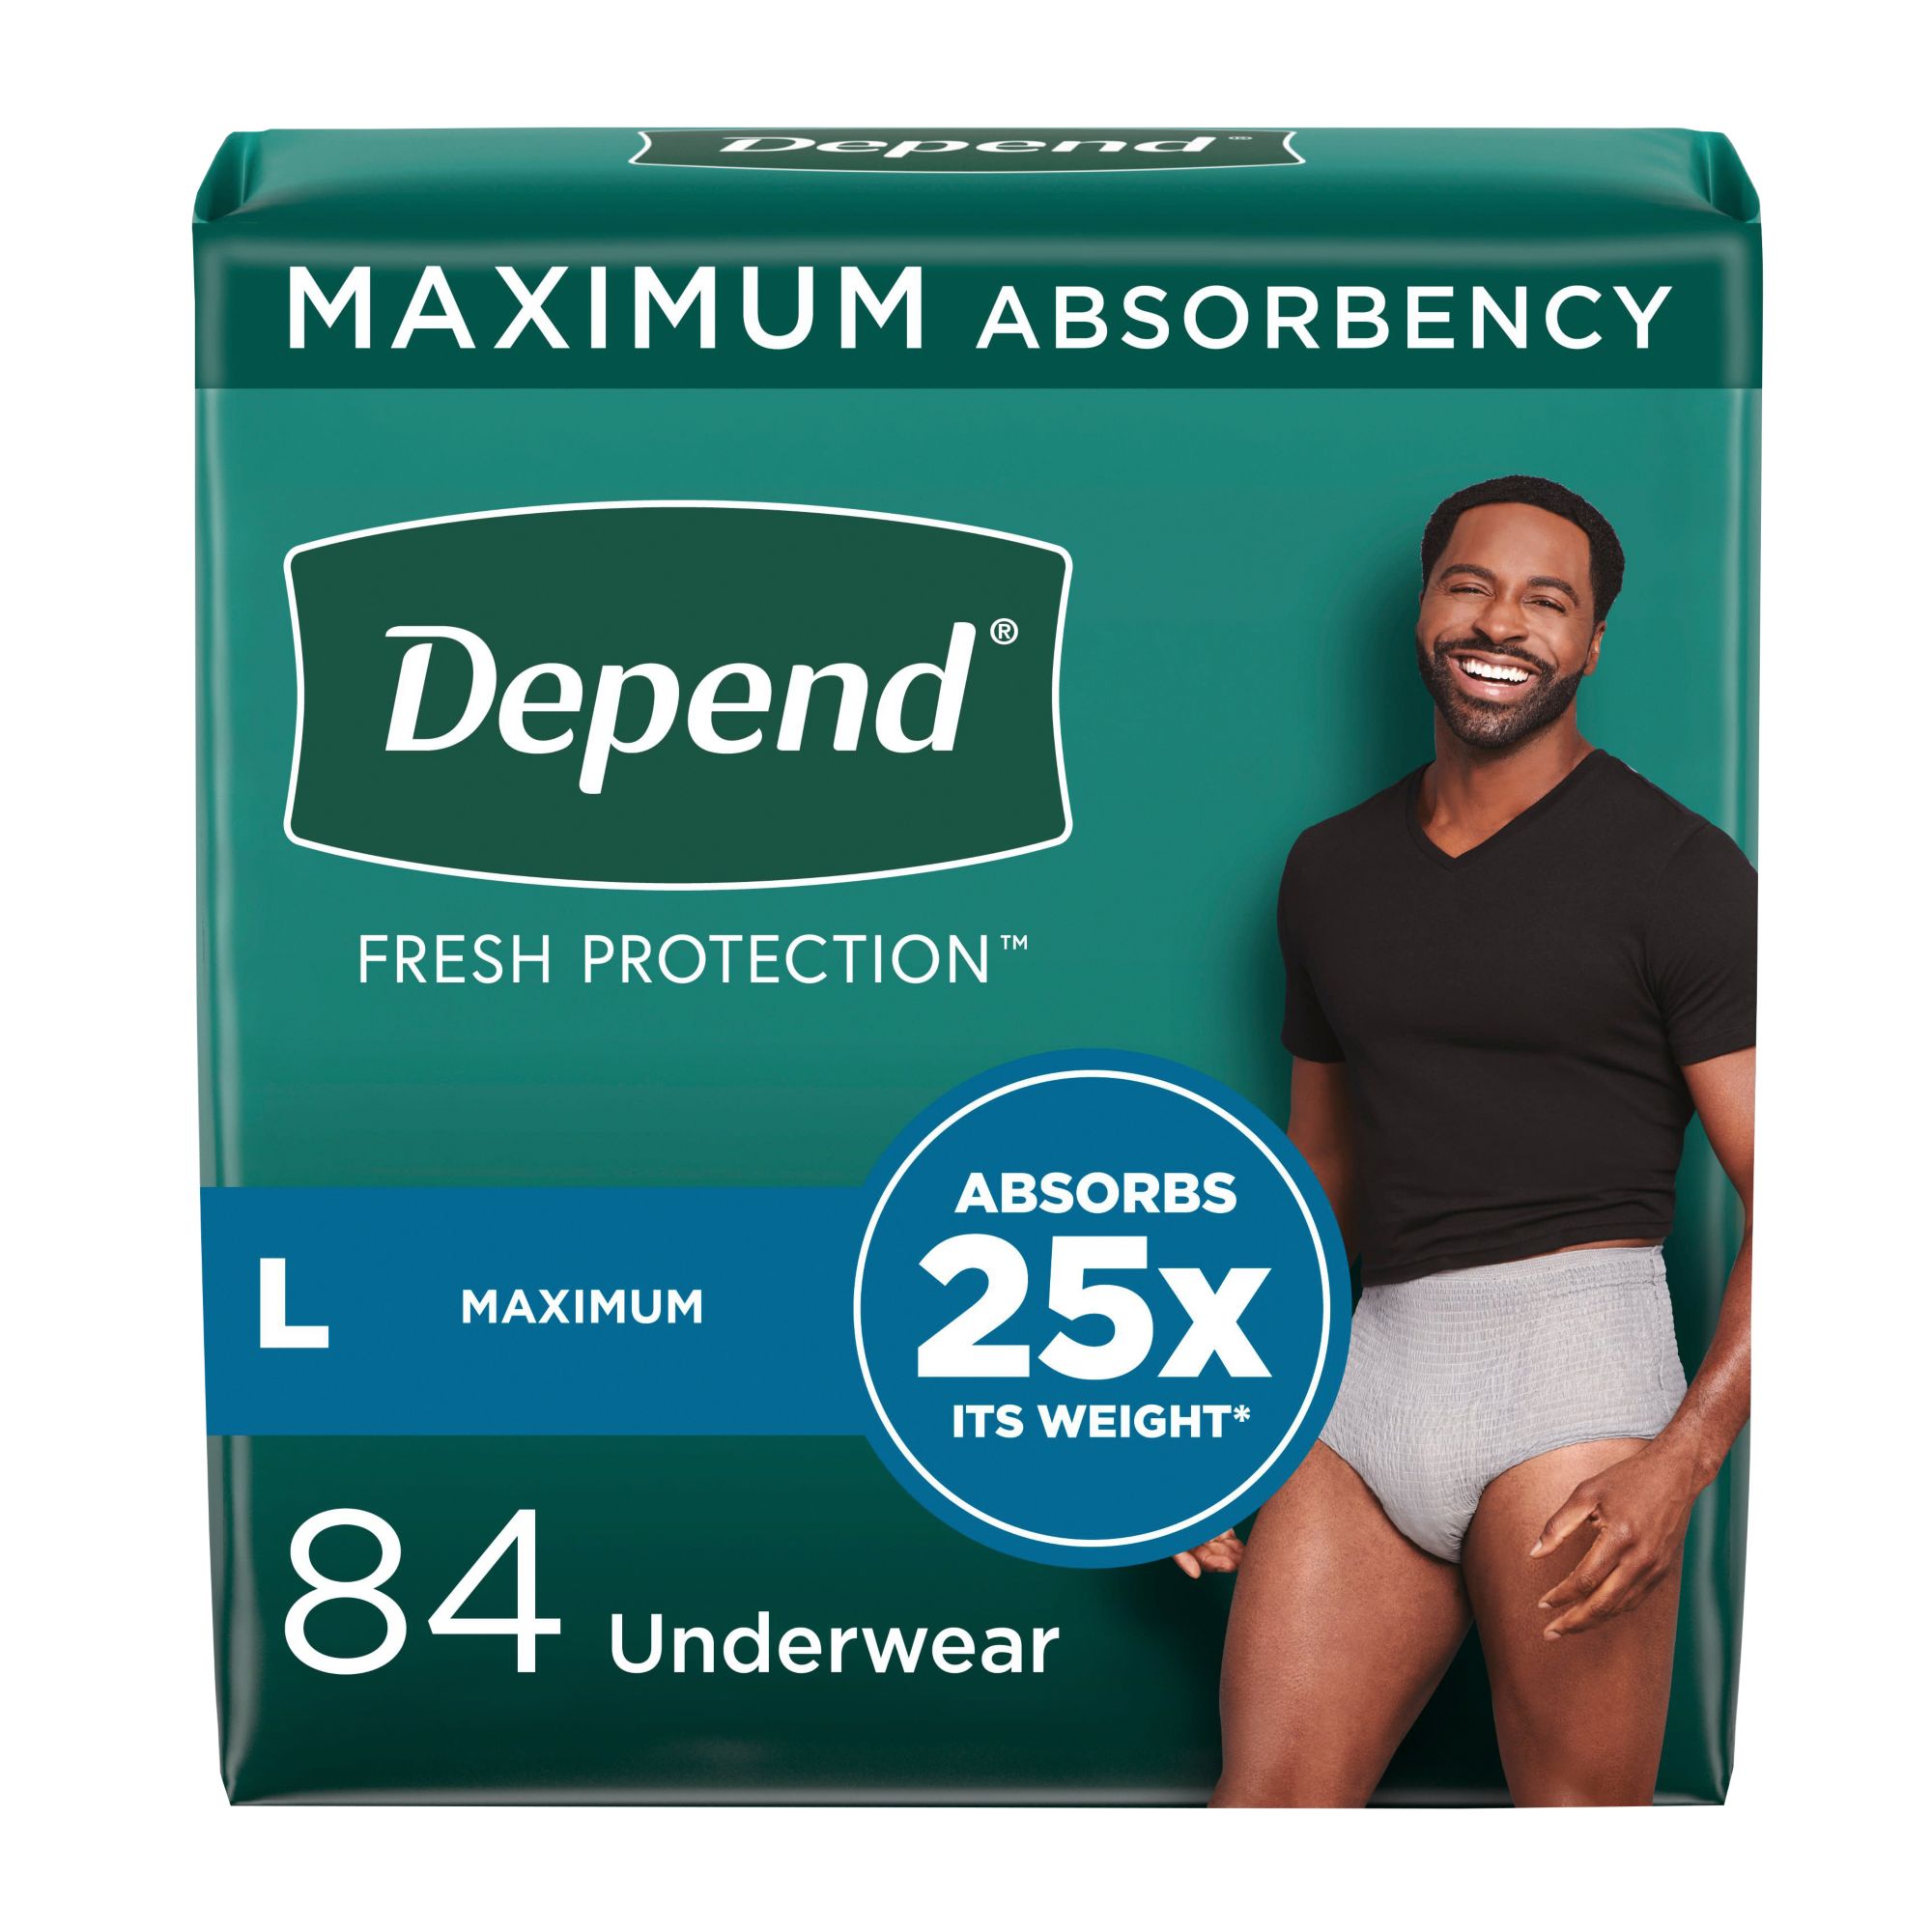 Post Surgery Underwear For Men